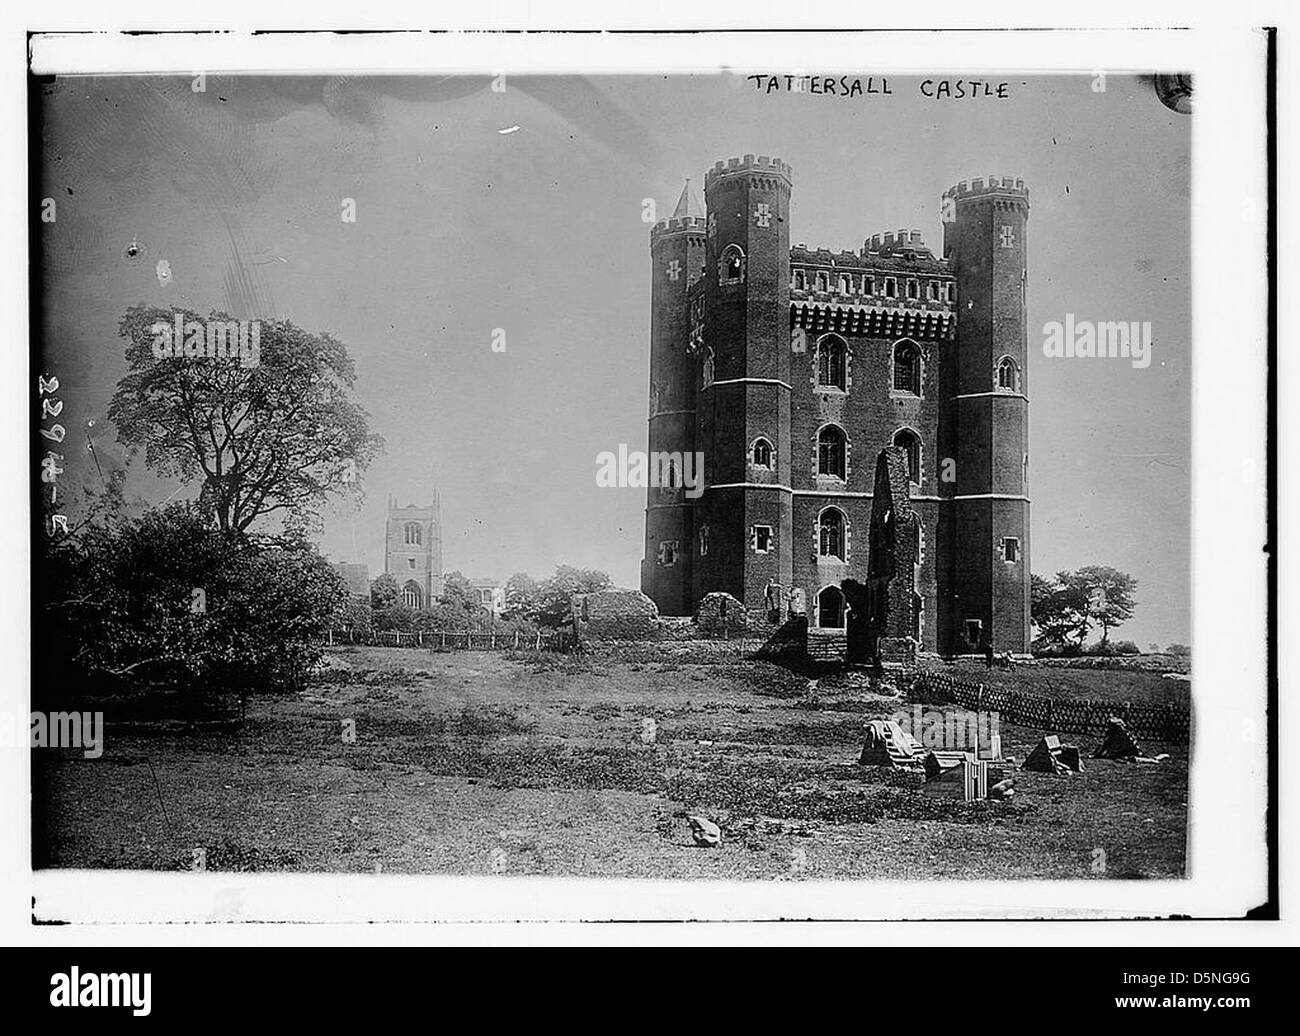 [Tattershall Castle, Lincolnshire, England] (LOC) Stock Photo